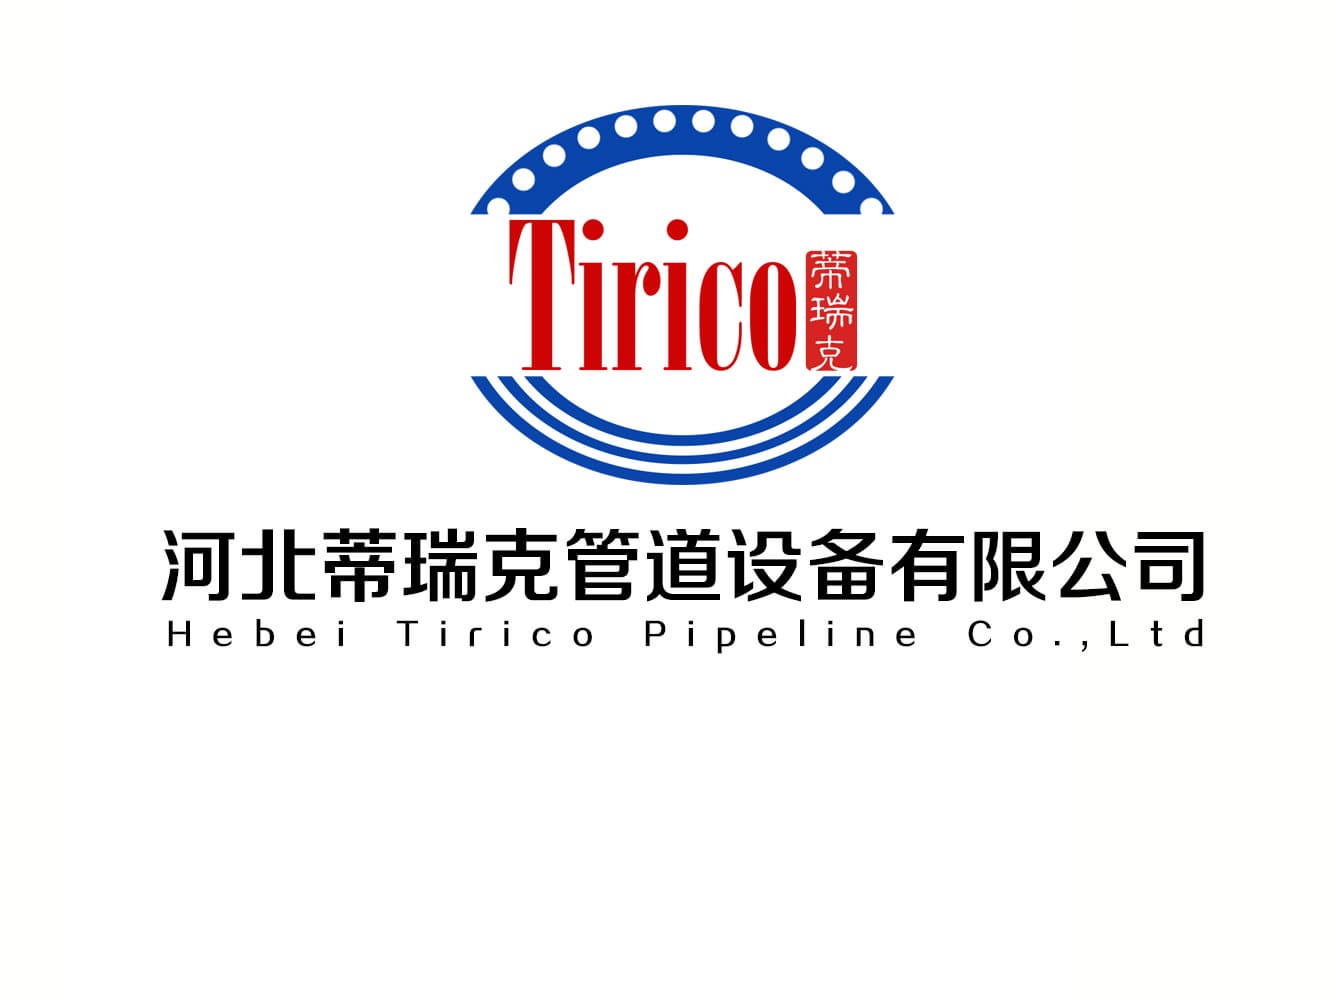 Hebei Tirico Pipeline Co.,Ltd